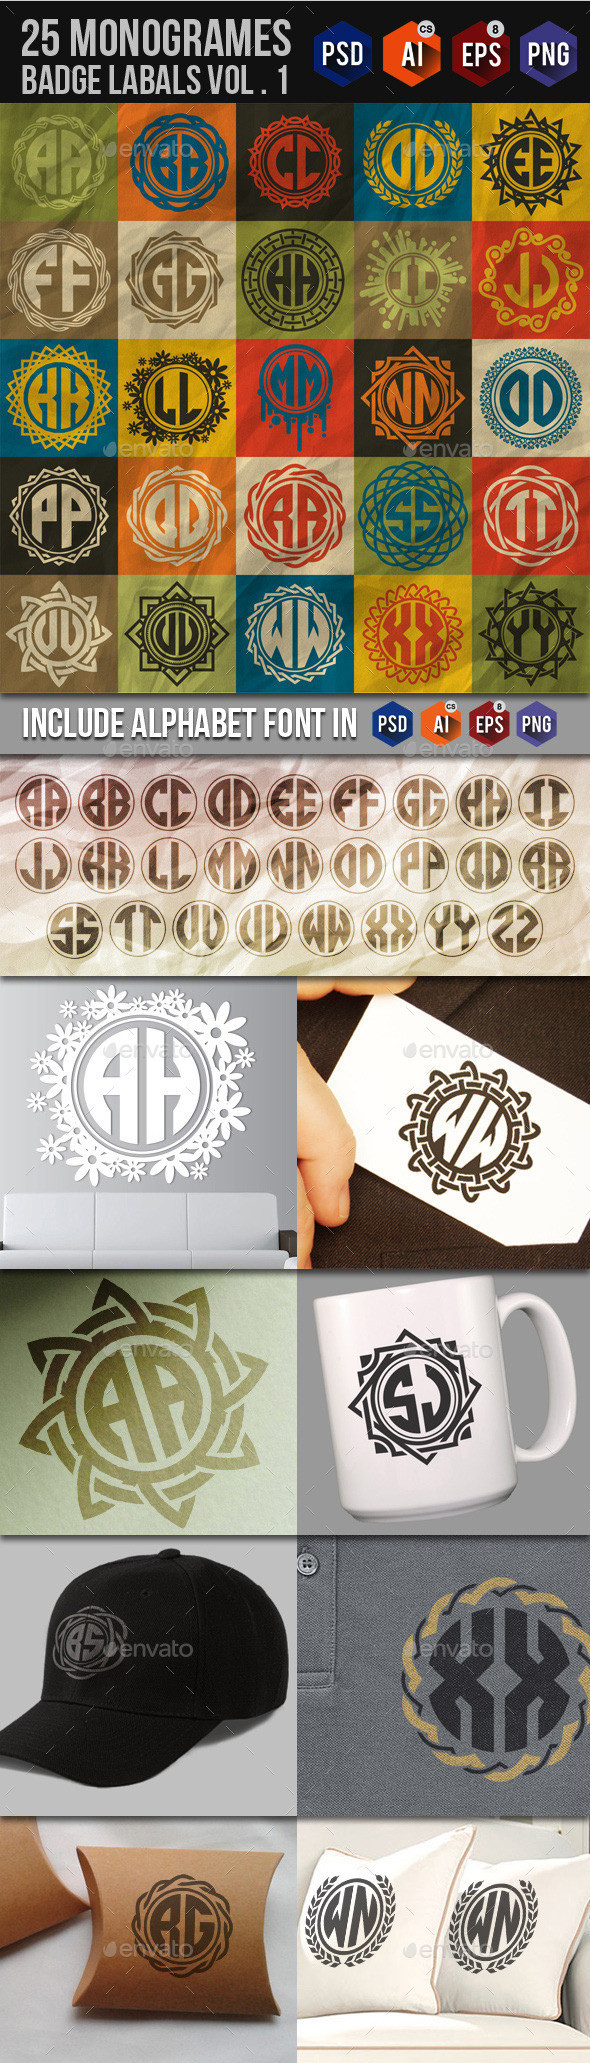 25 monogrames badge labals with alphabet v1 590